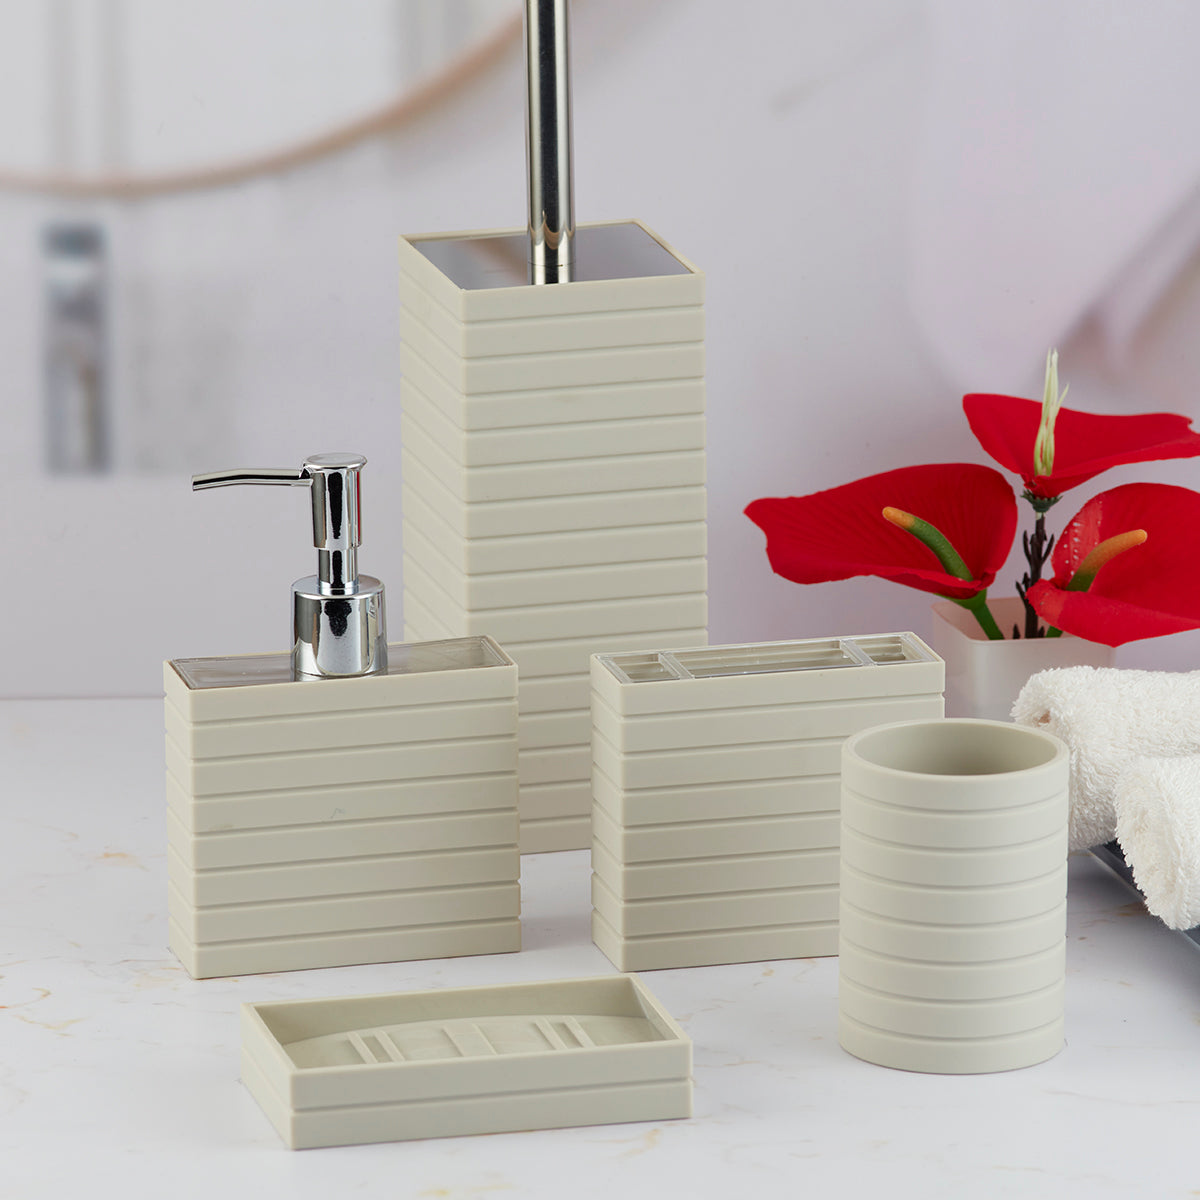 Acrylic Bathroom Accessories Set of 5 Bath Set with Soap Dispenser (10035)